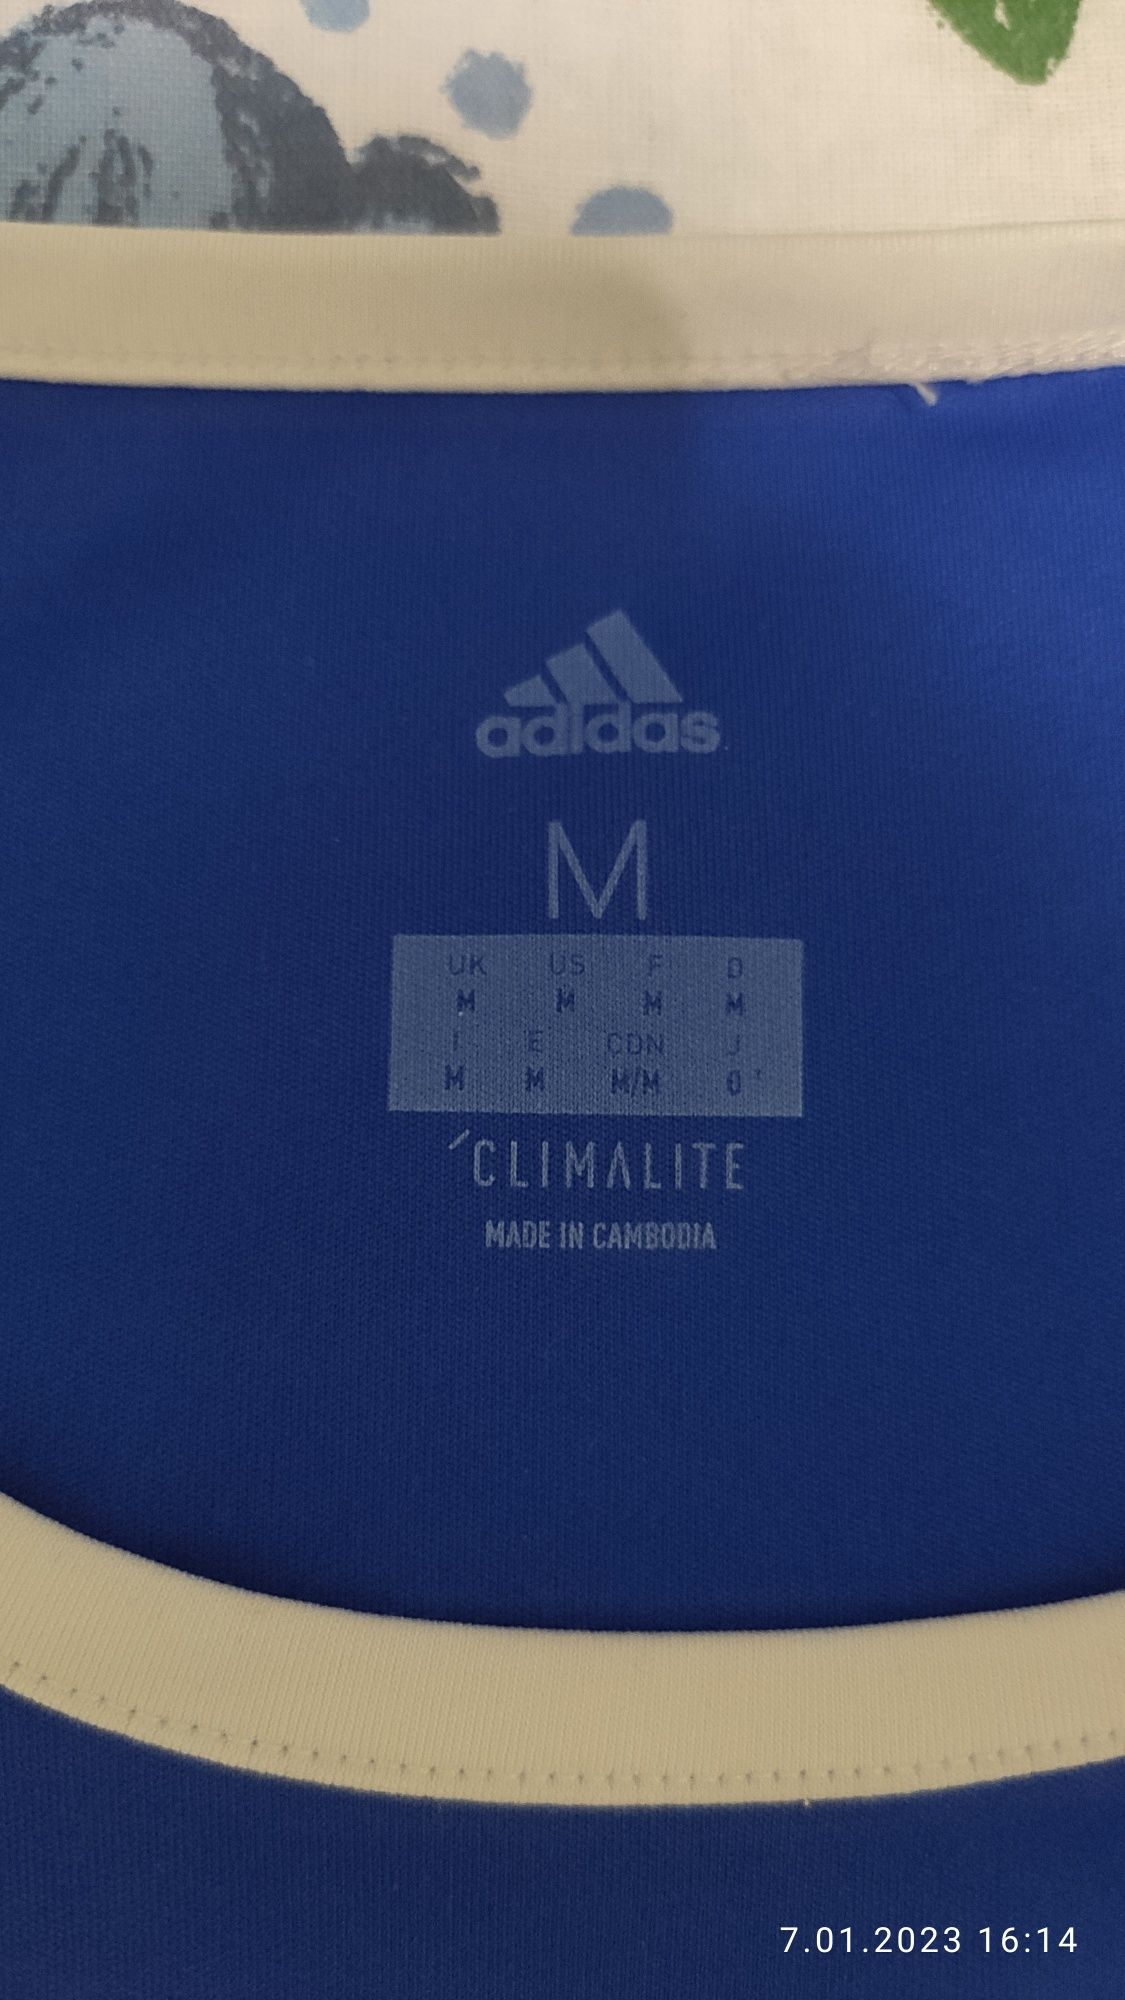 Koszulka męska Adidas rozmiar M/L nowa bez metki.